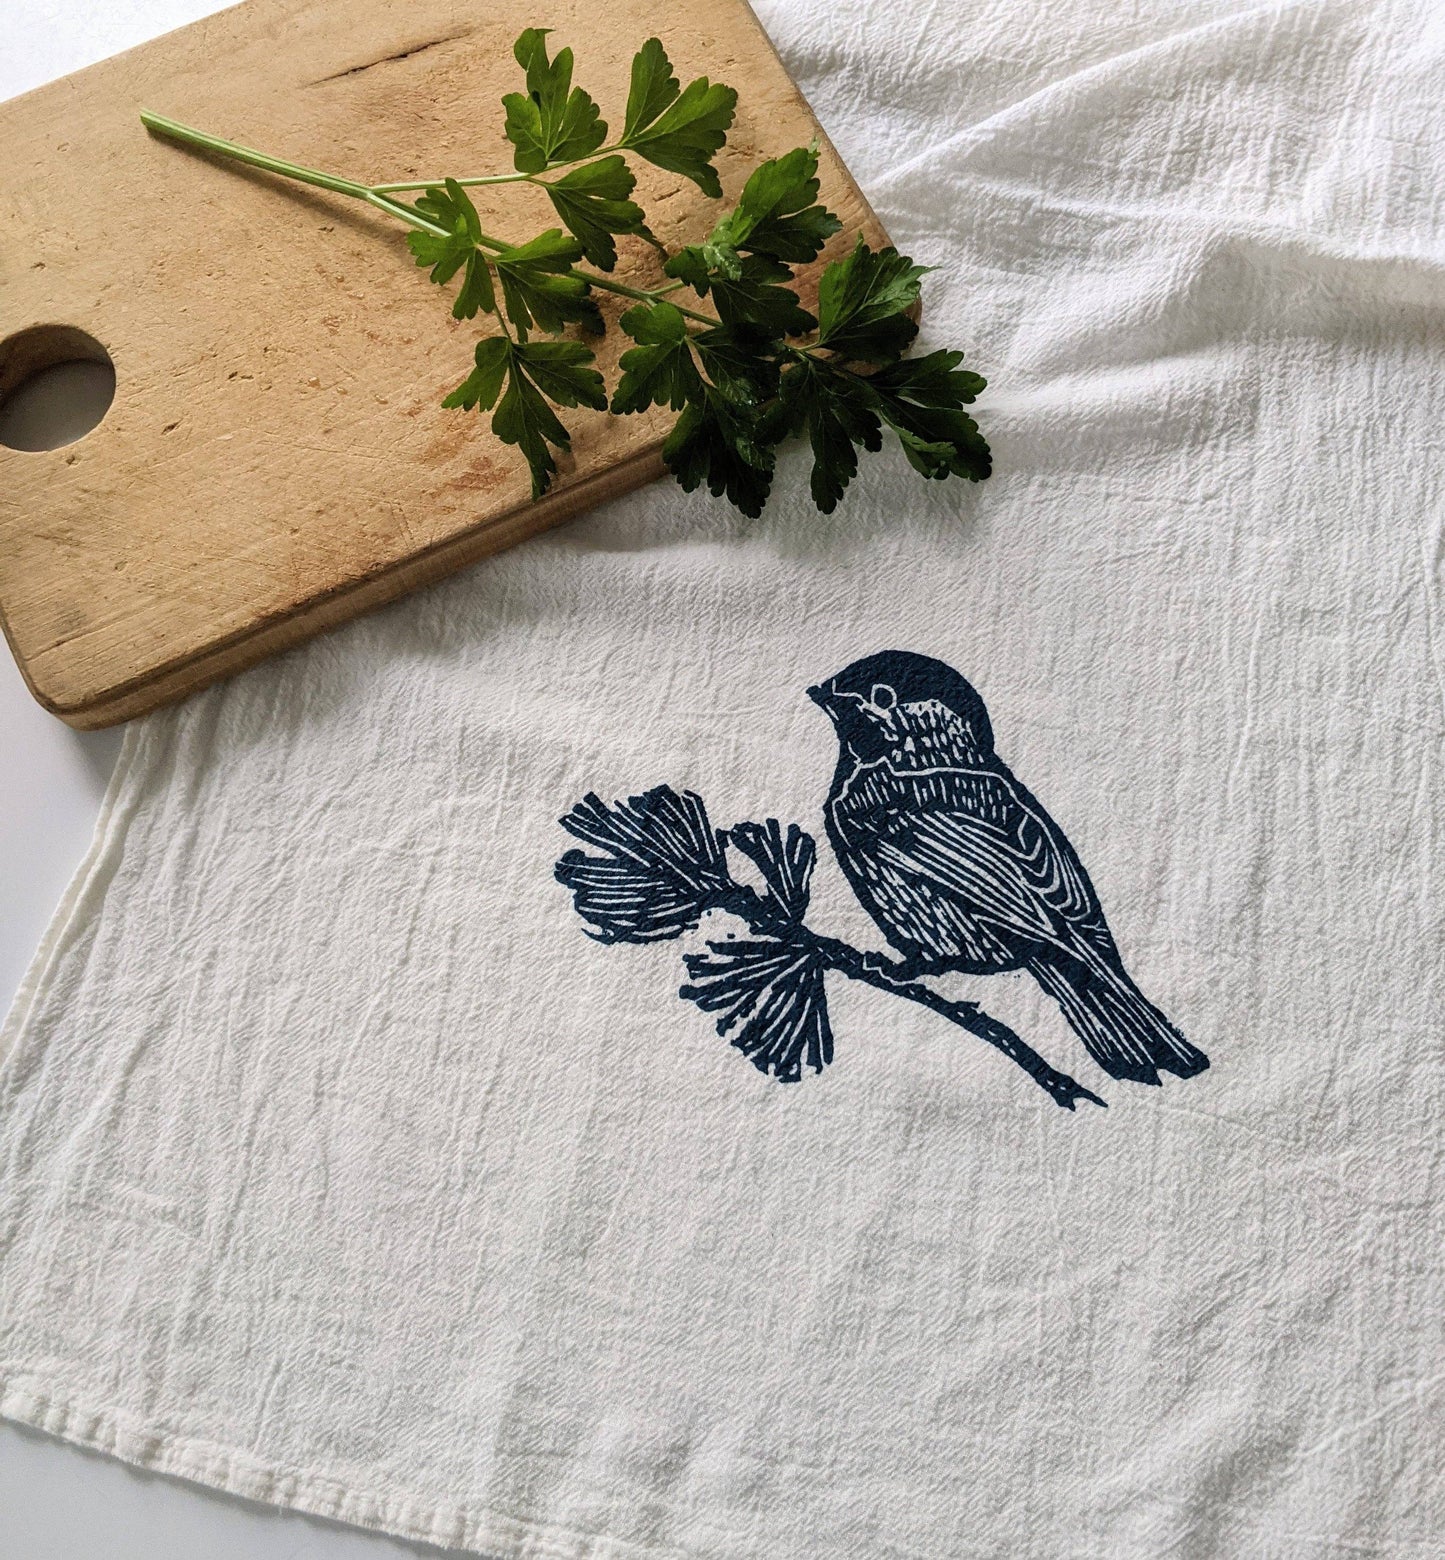 artgoodies - Chickadee flour sack tea towel